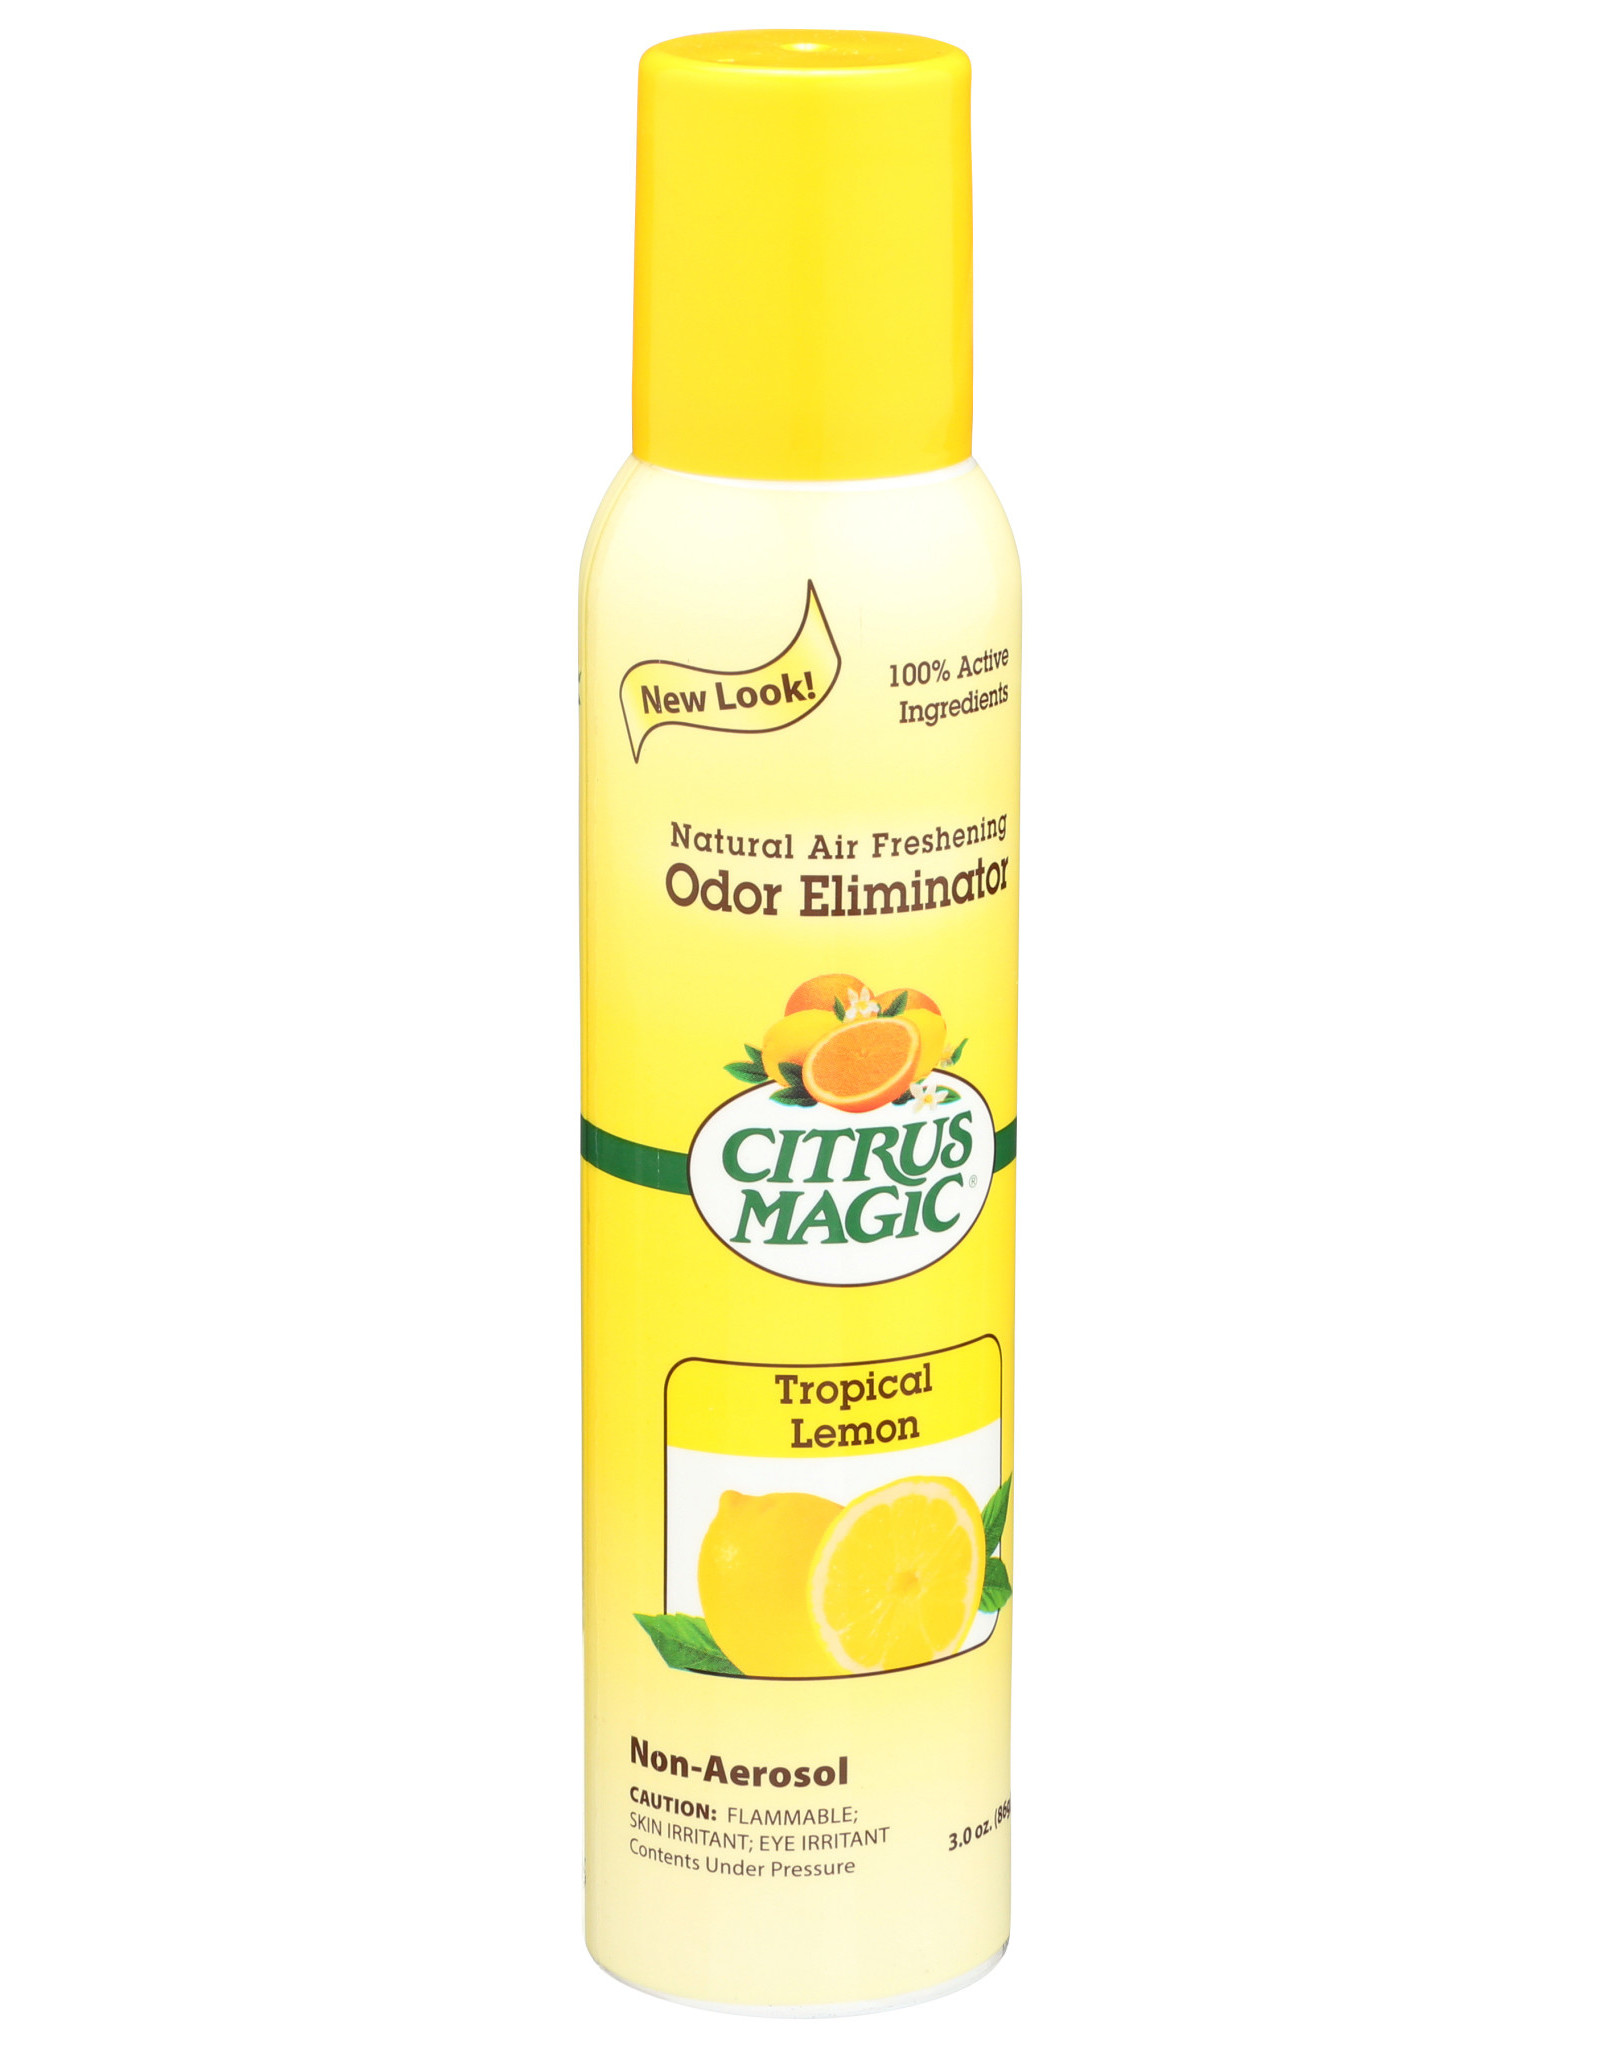 CITRUS MAGIC Citrus Magic Tropical Lemon Air Freshener 3 oz